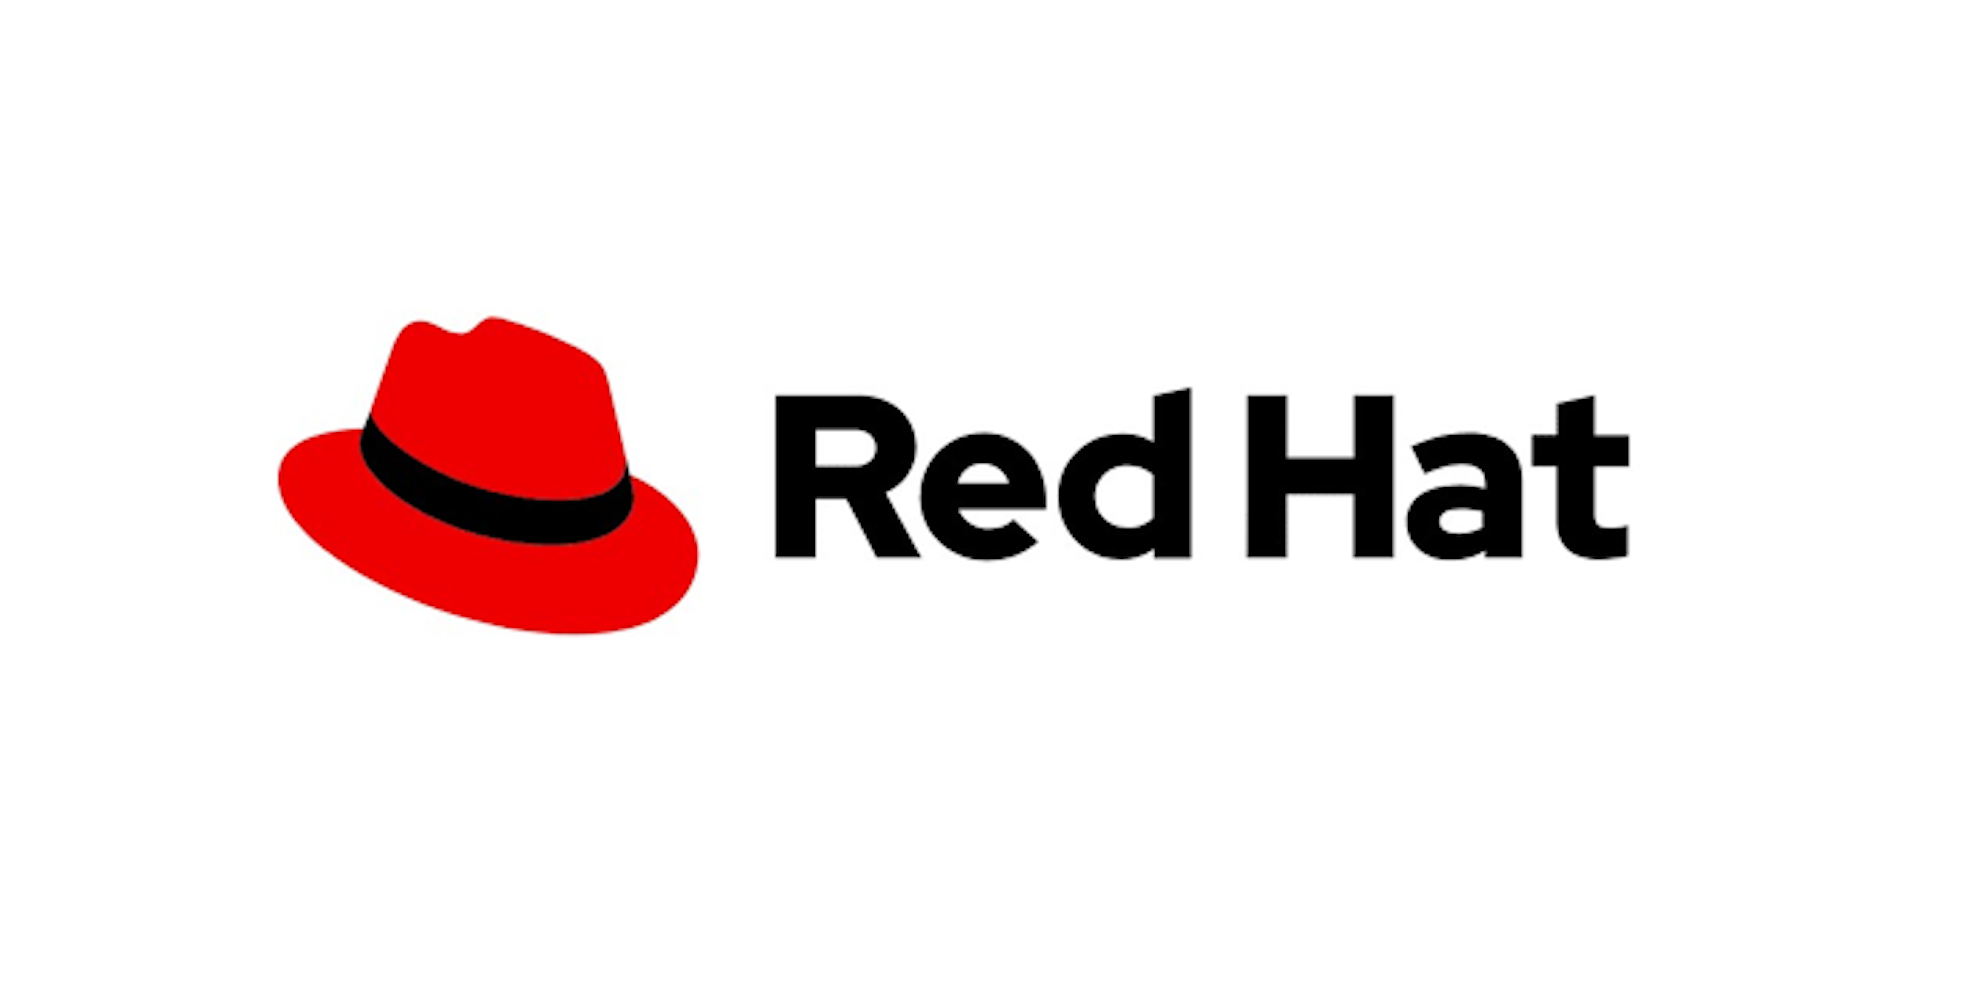 Red Hat is partner van Virtual Sciences Conclusion